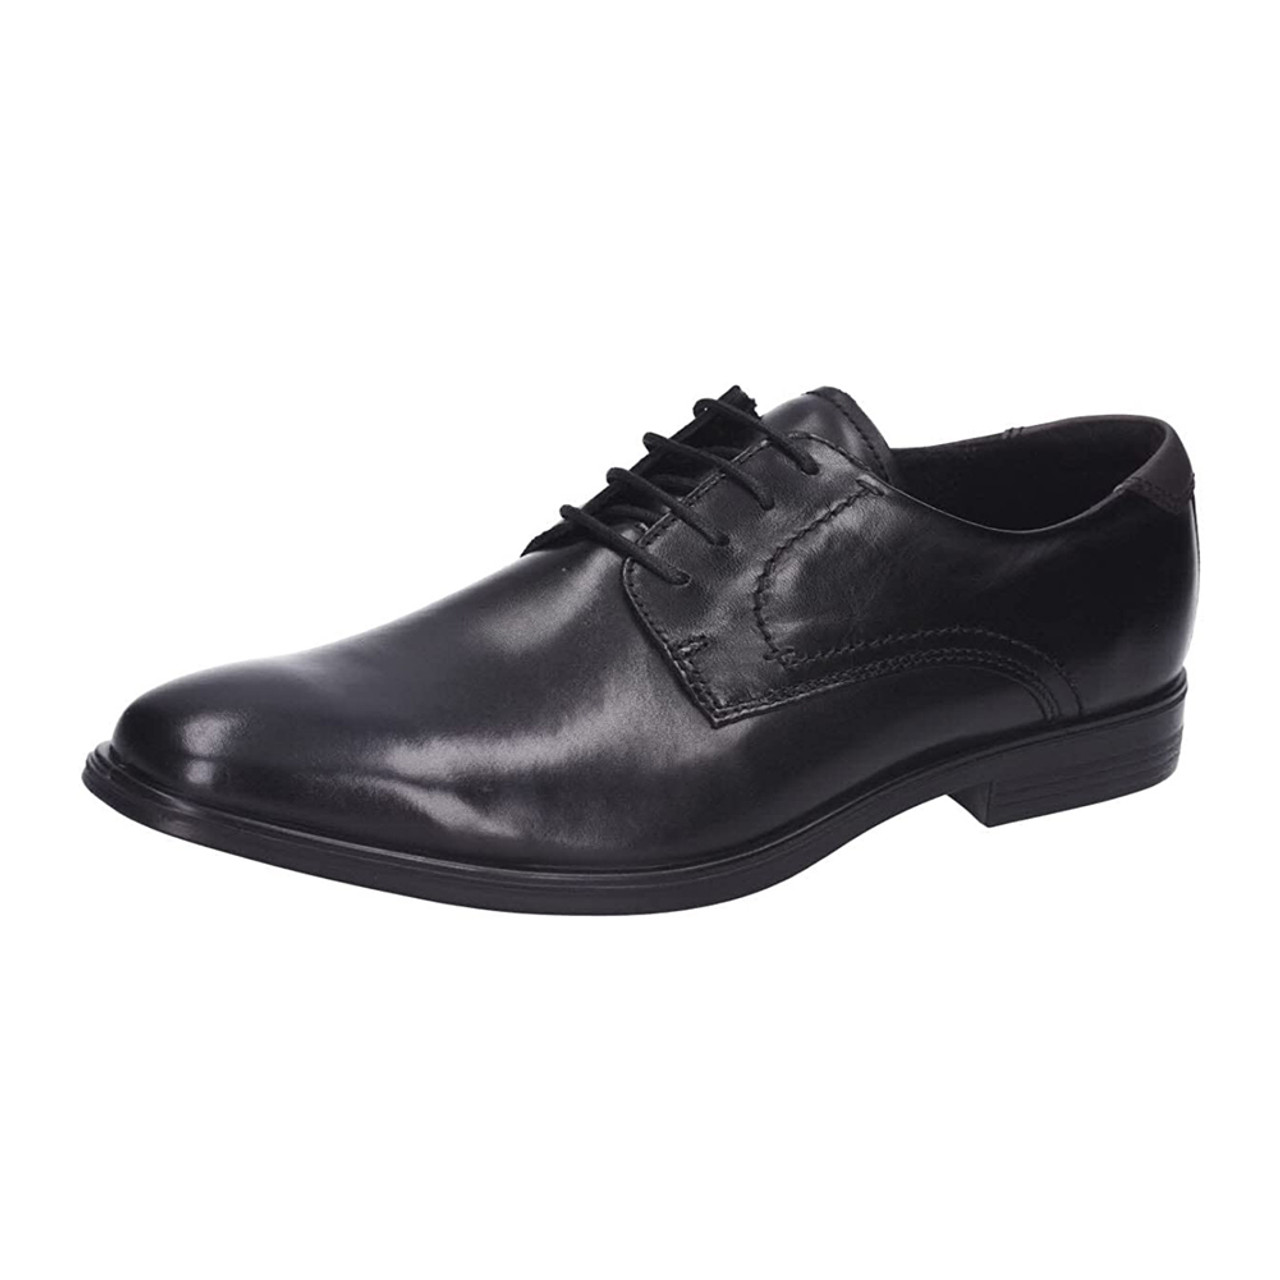 farvestof forælder Visum ECCO Men's Melbourne Tie Oxford - Black | Discount ECCO Men's Shoes & More  - Shoolu.com | Shoolu.com